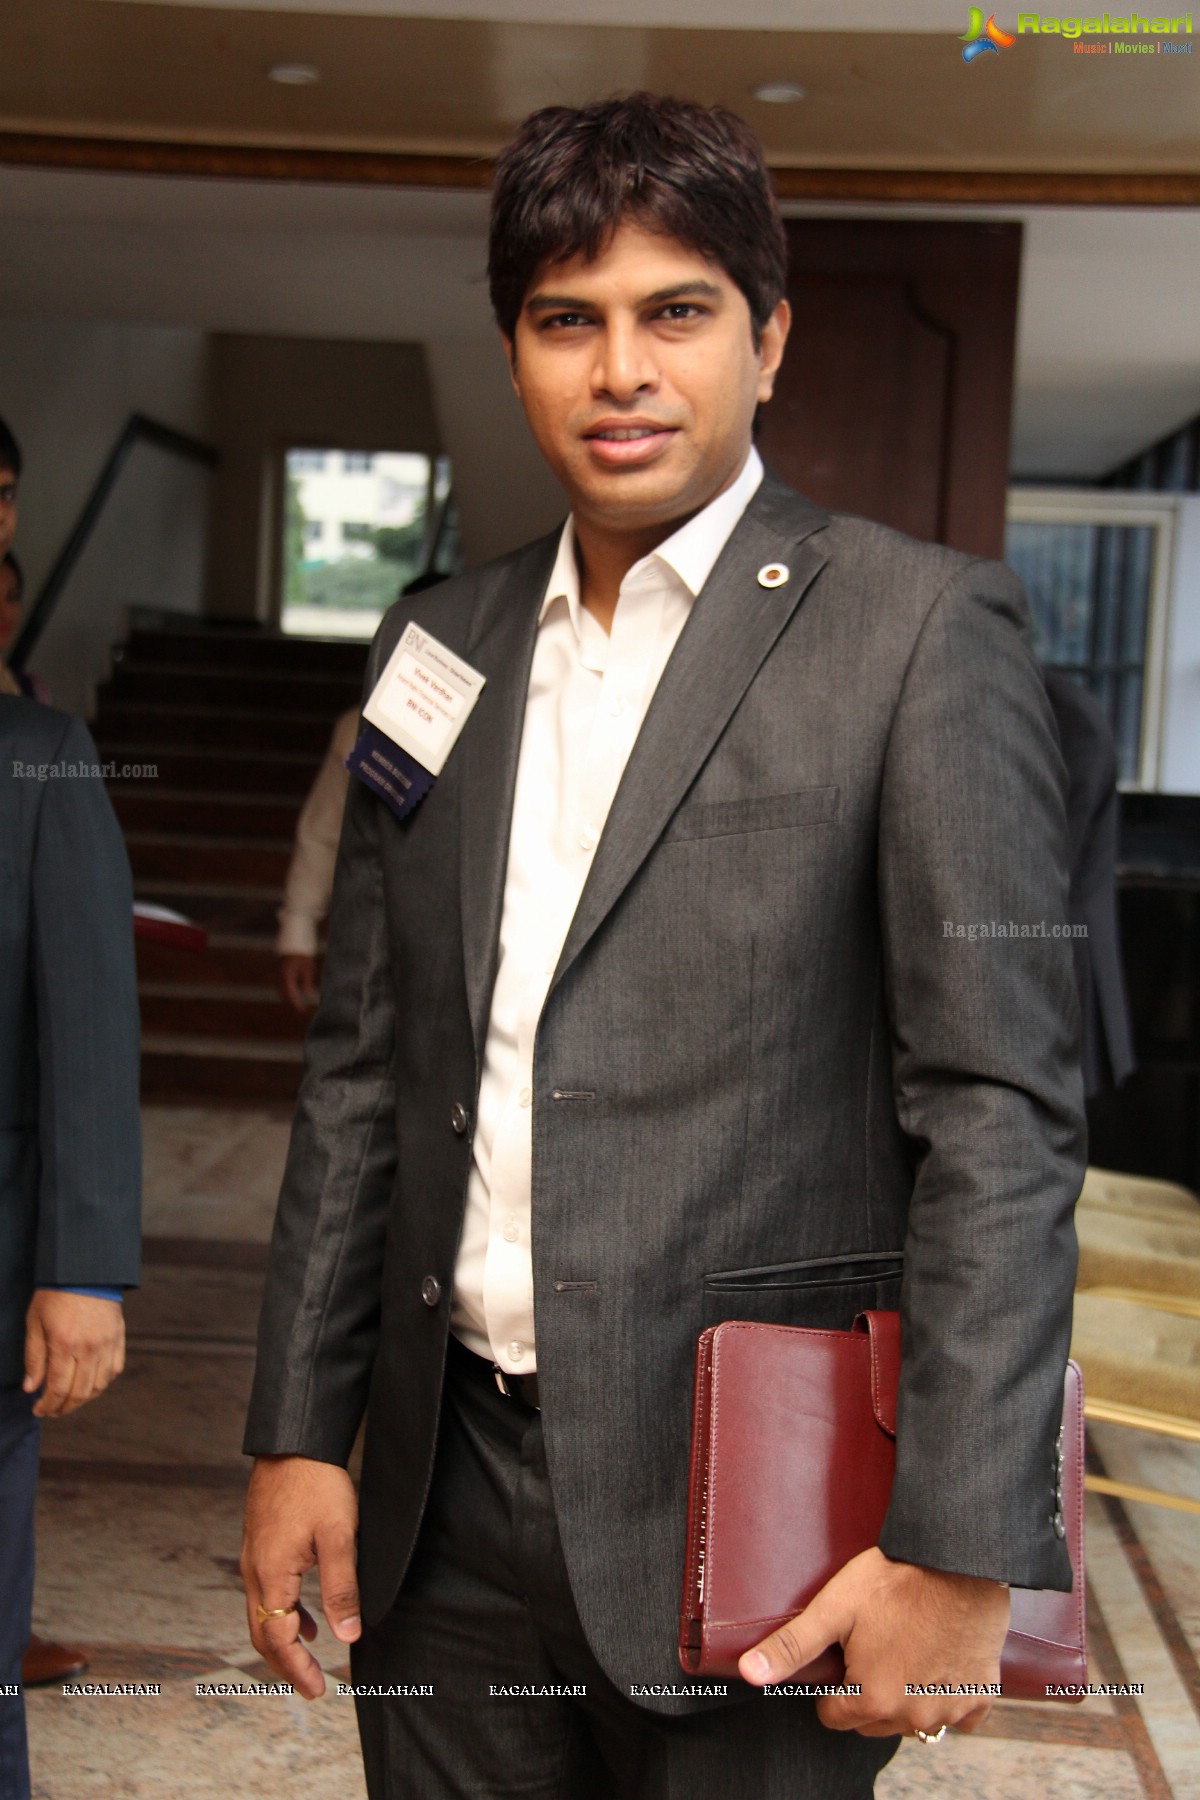 BNI Icon Meet (July 29, 2014) at Ala Liberty, Hyderabad